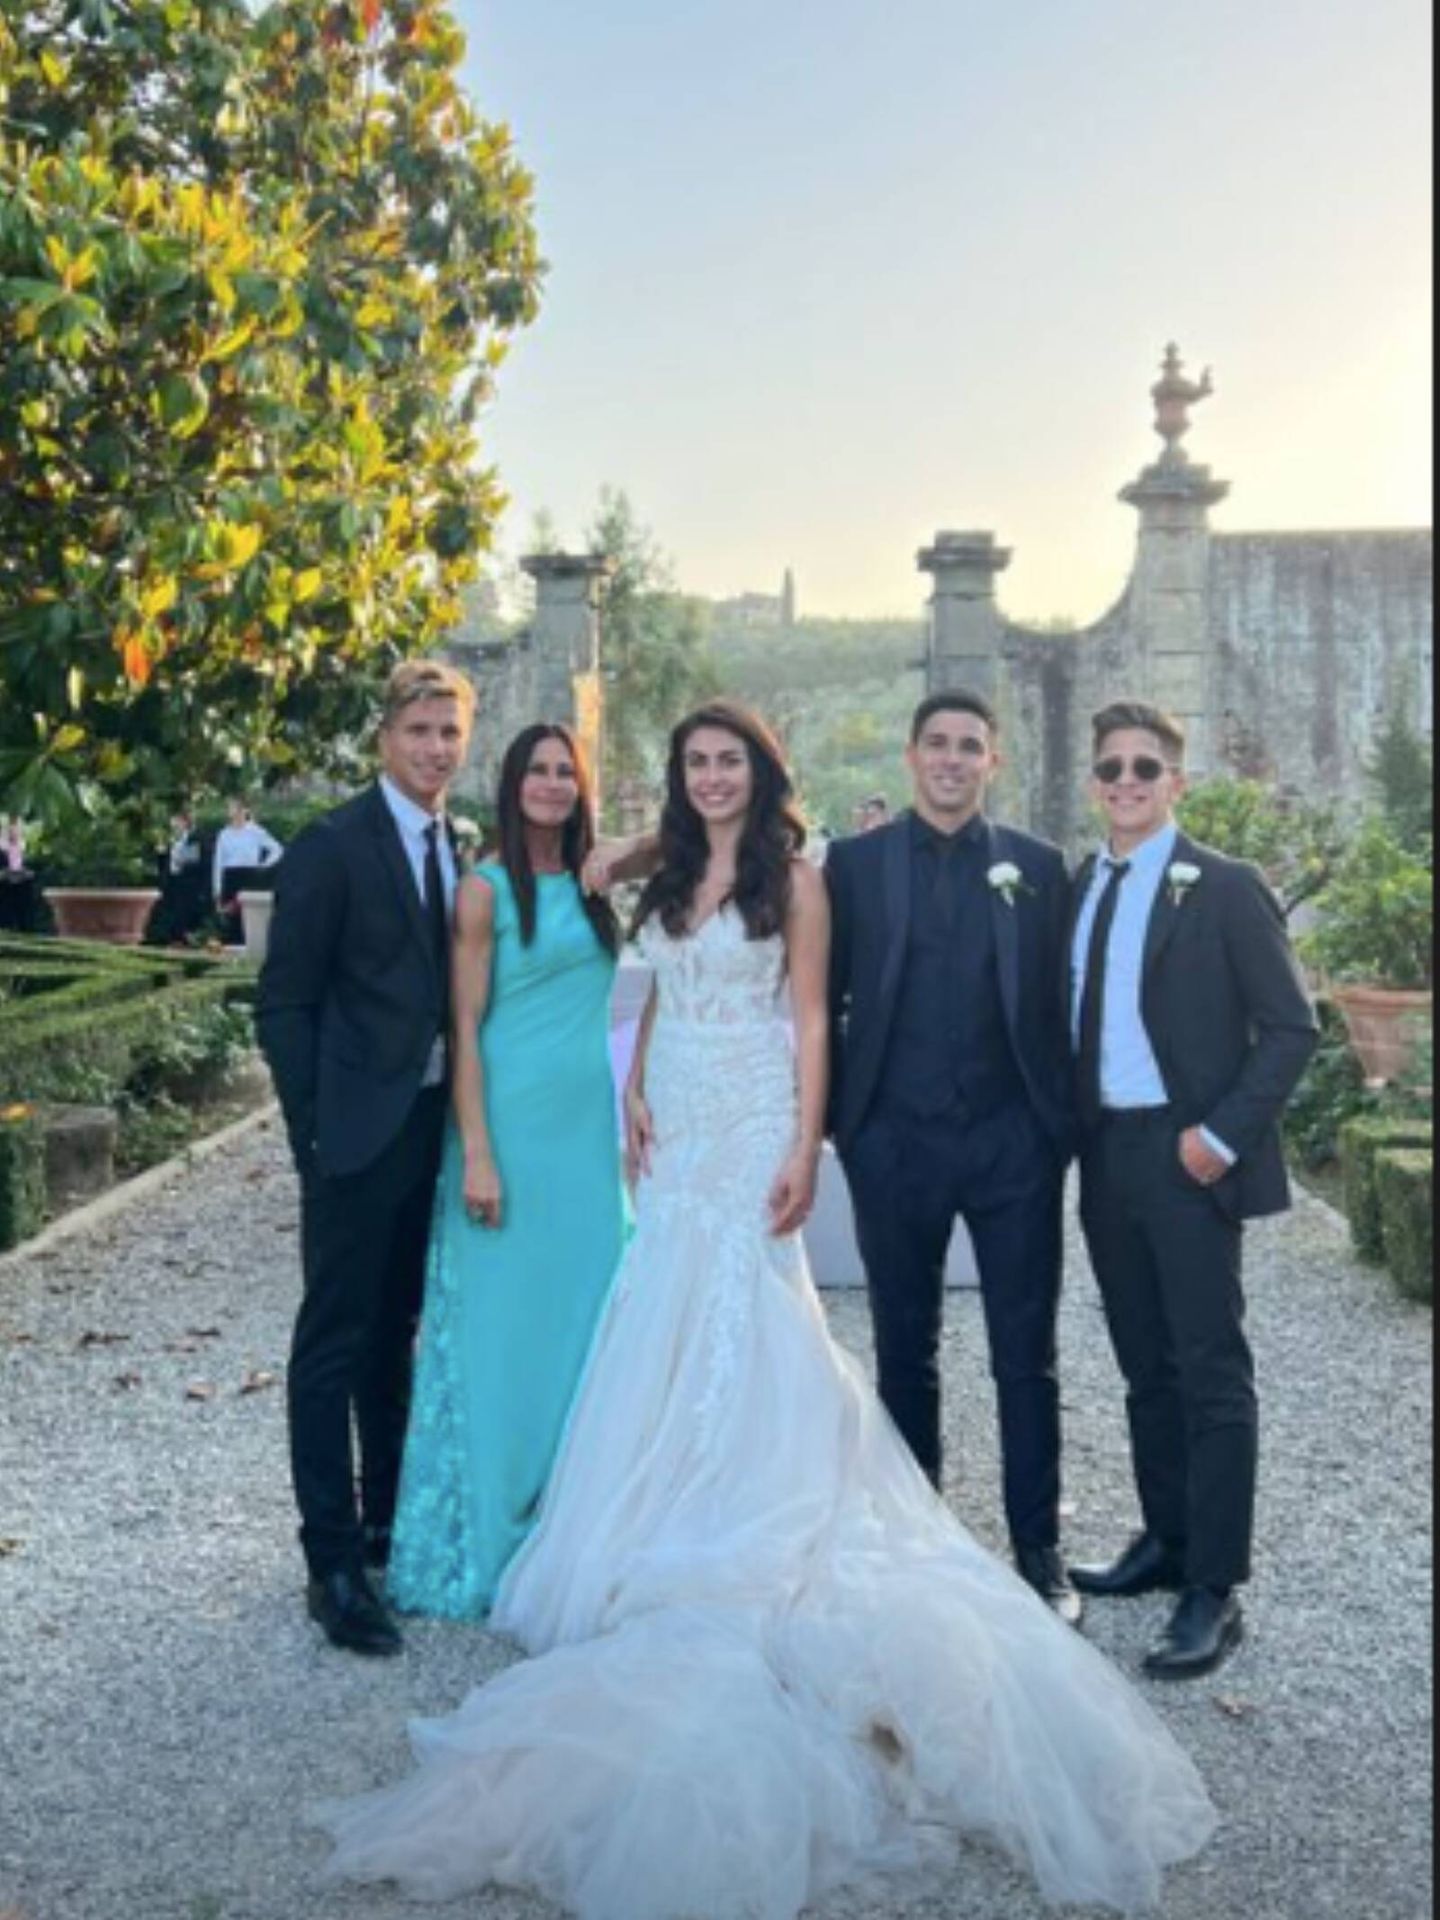 Giovanni Simeone y Giulia Coppini, con la madre y los hermanos del novio. (Instagram/@giulisimeone)